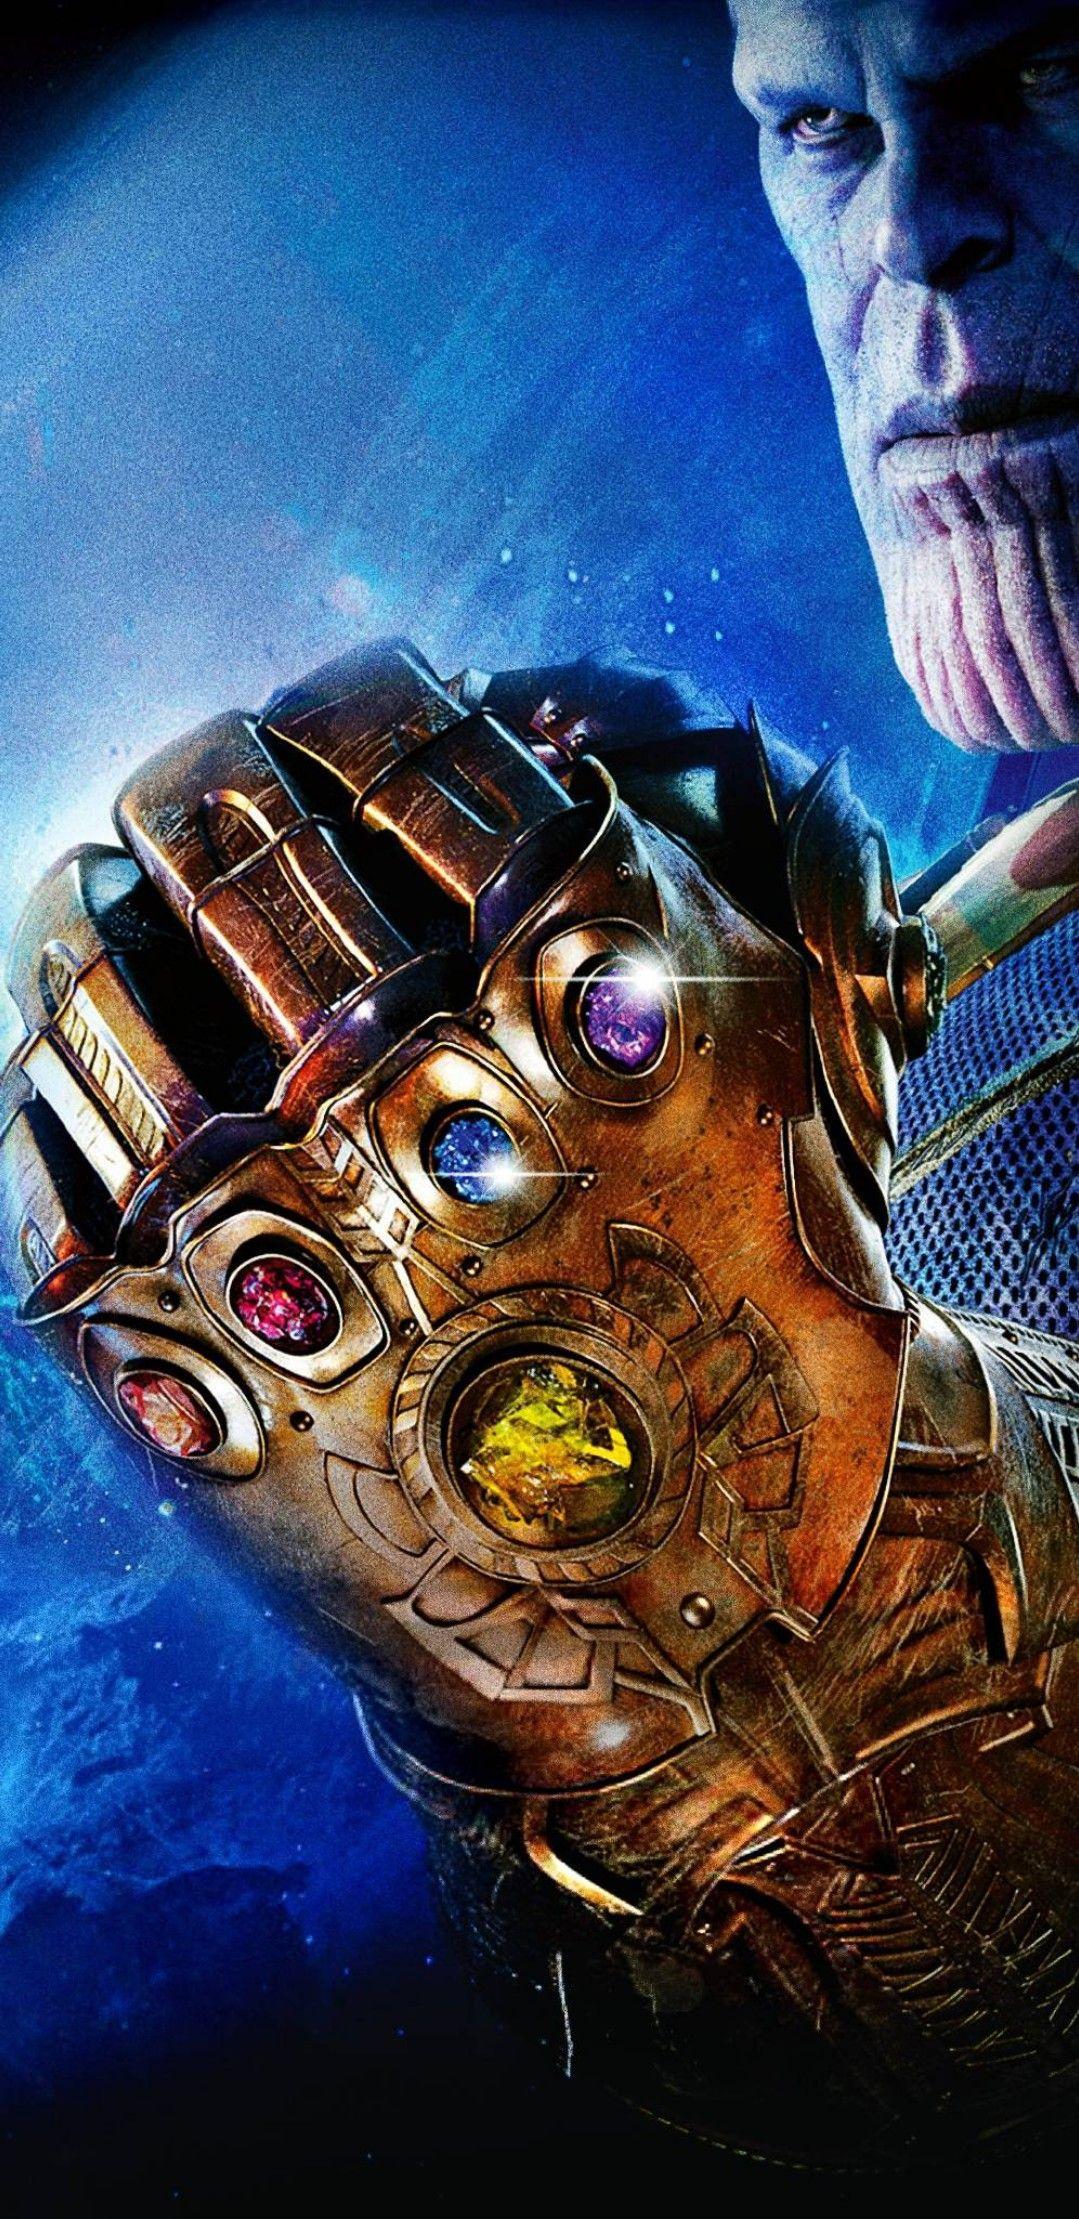 Thanos Avengers Infinity War Wallpaper Zedge Infinity